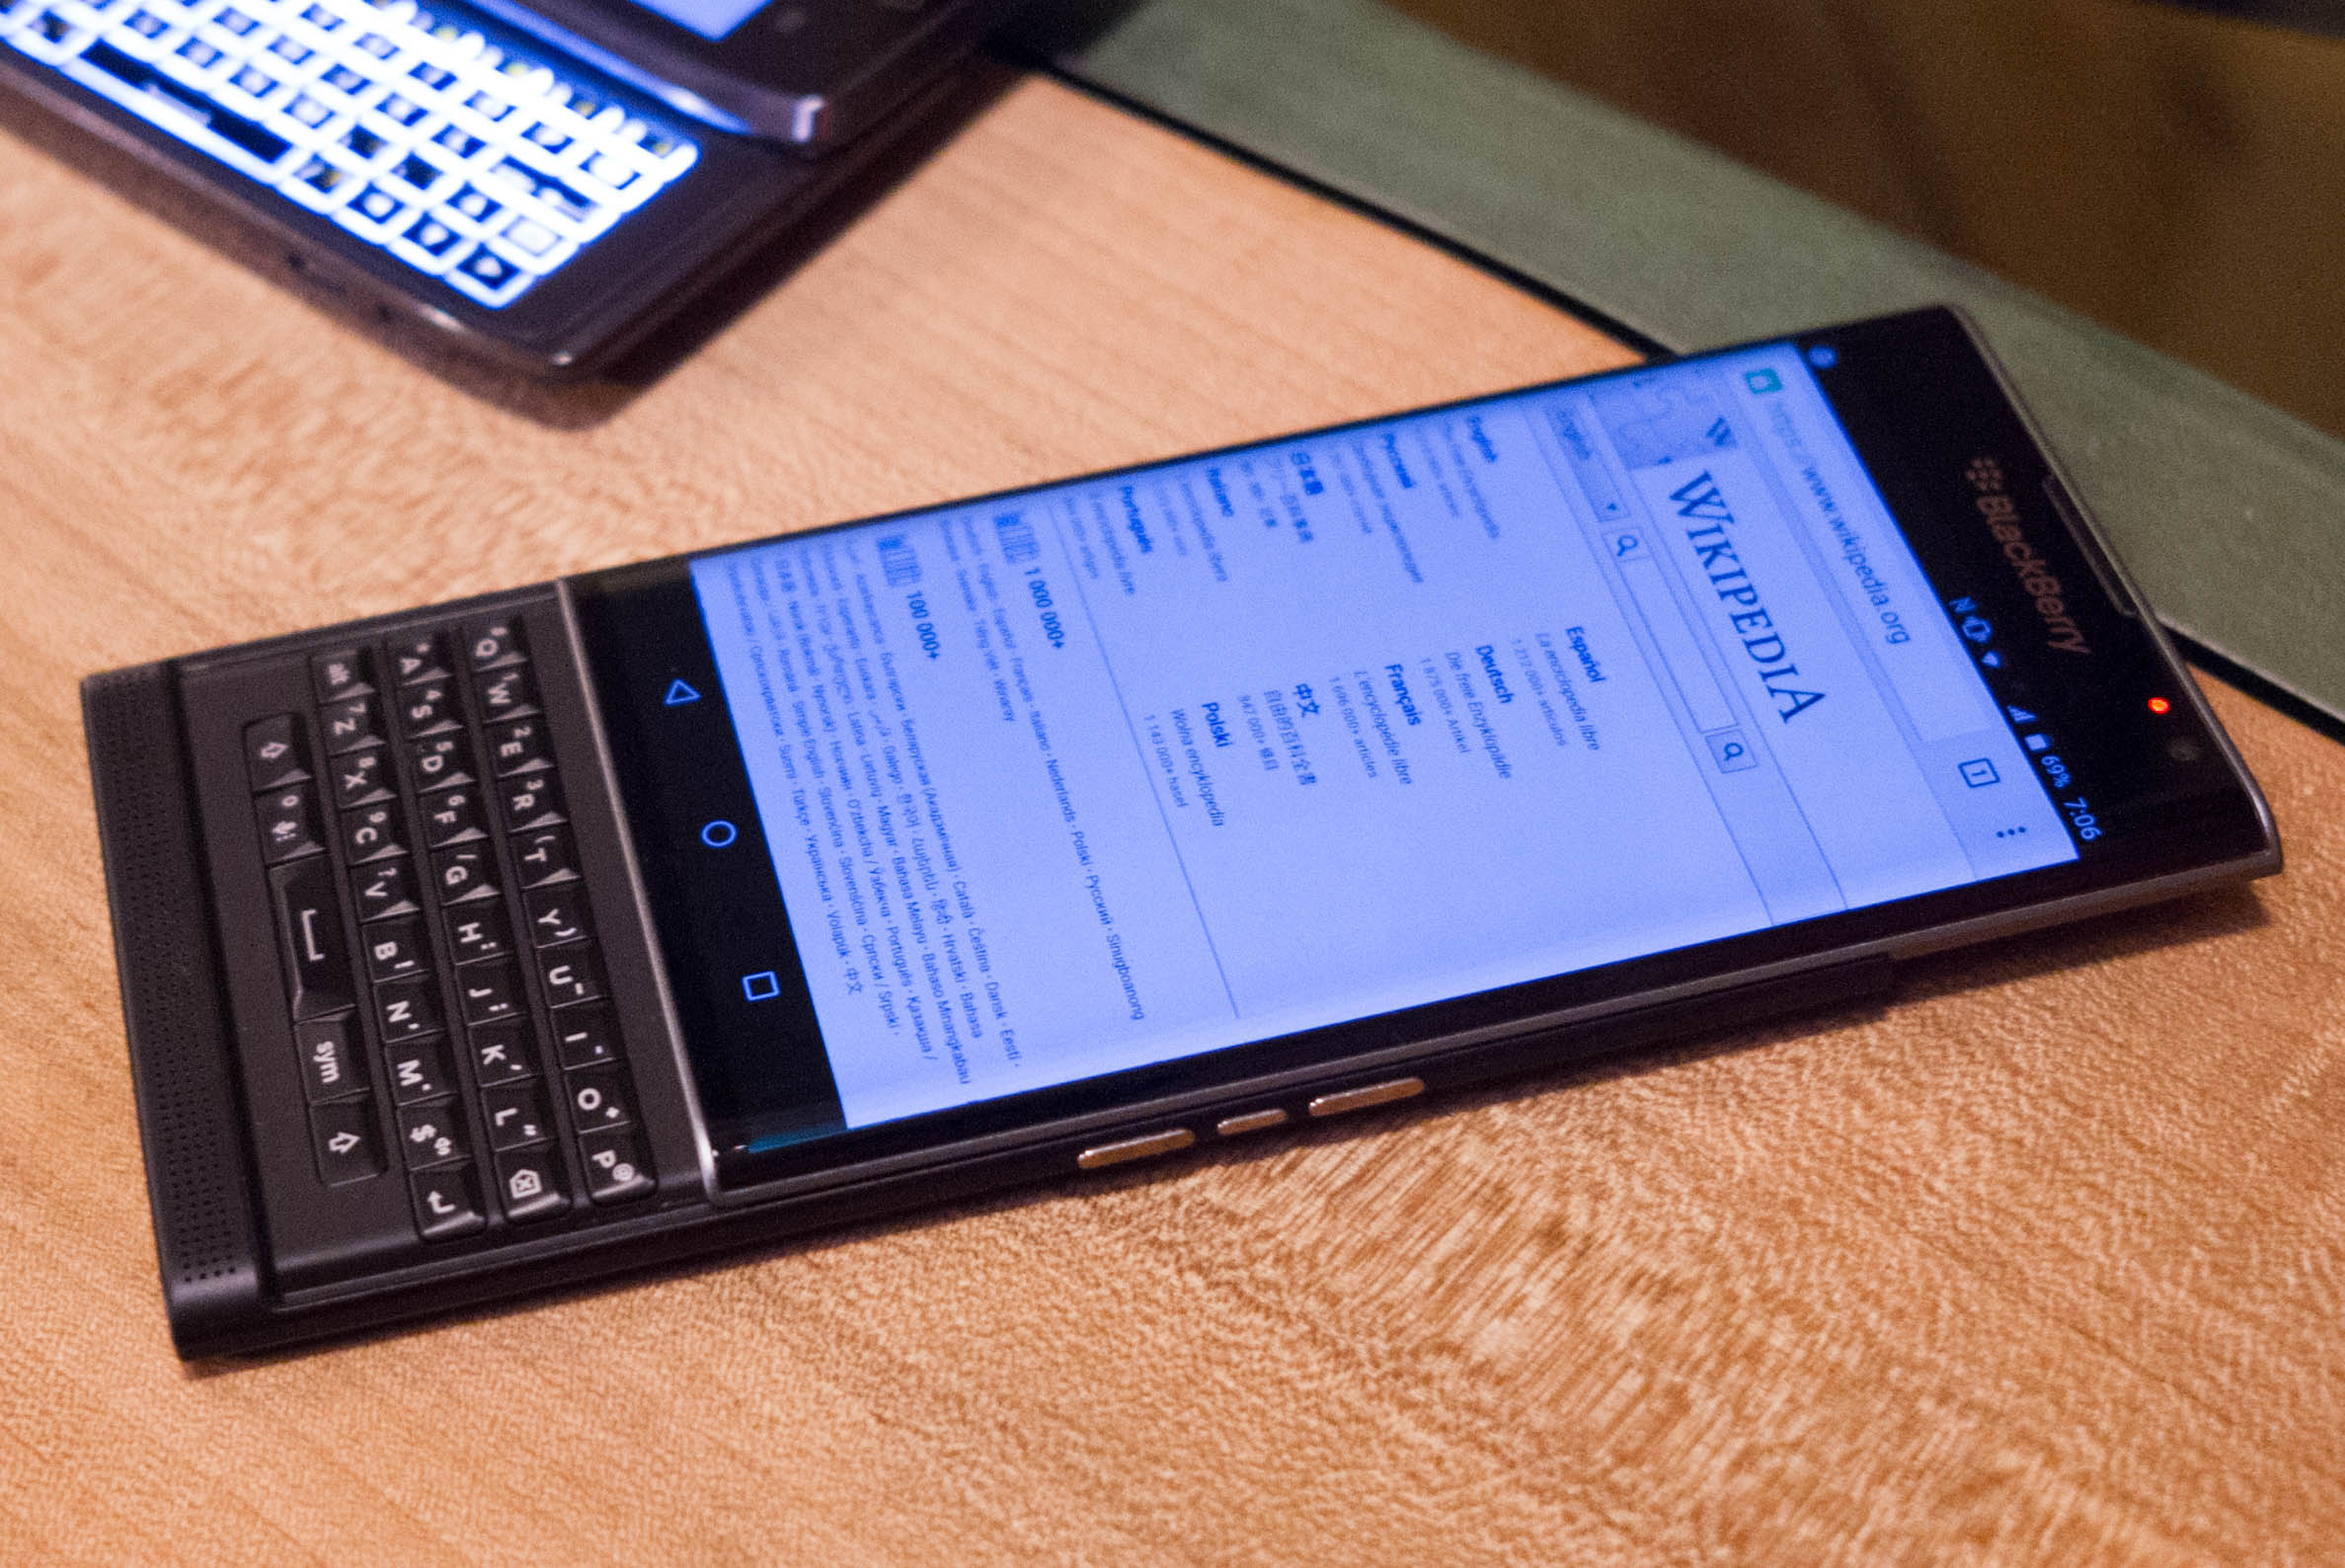 The Slick Blackberry Smartphone